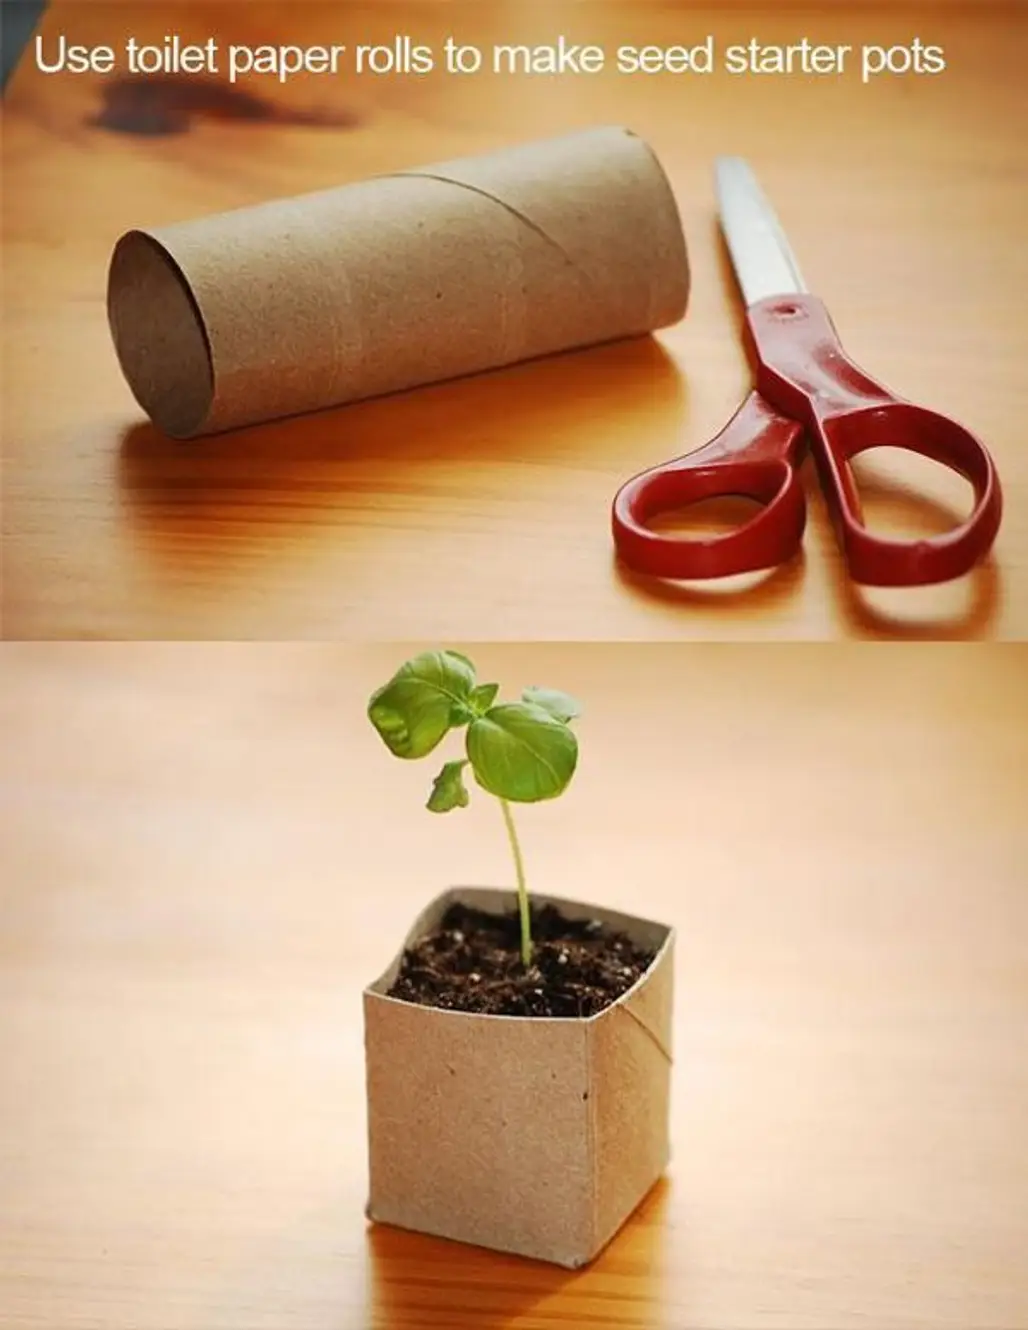 Start Plants in Toilet Paper Tubes